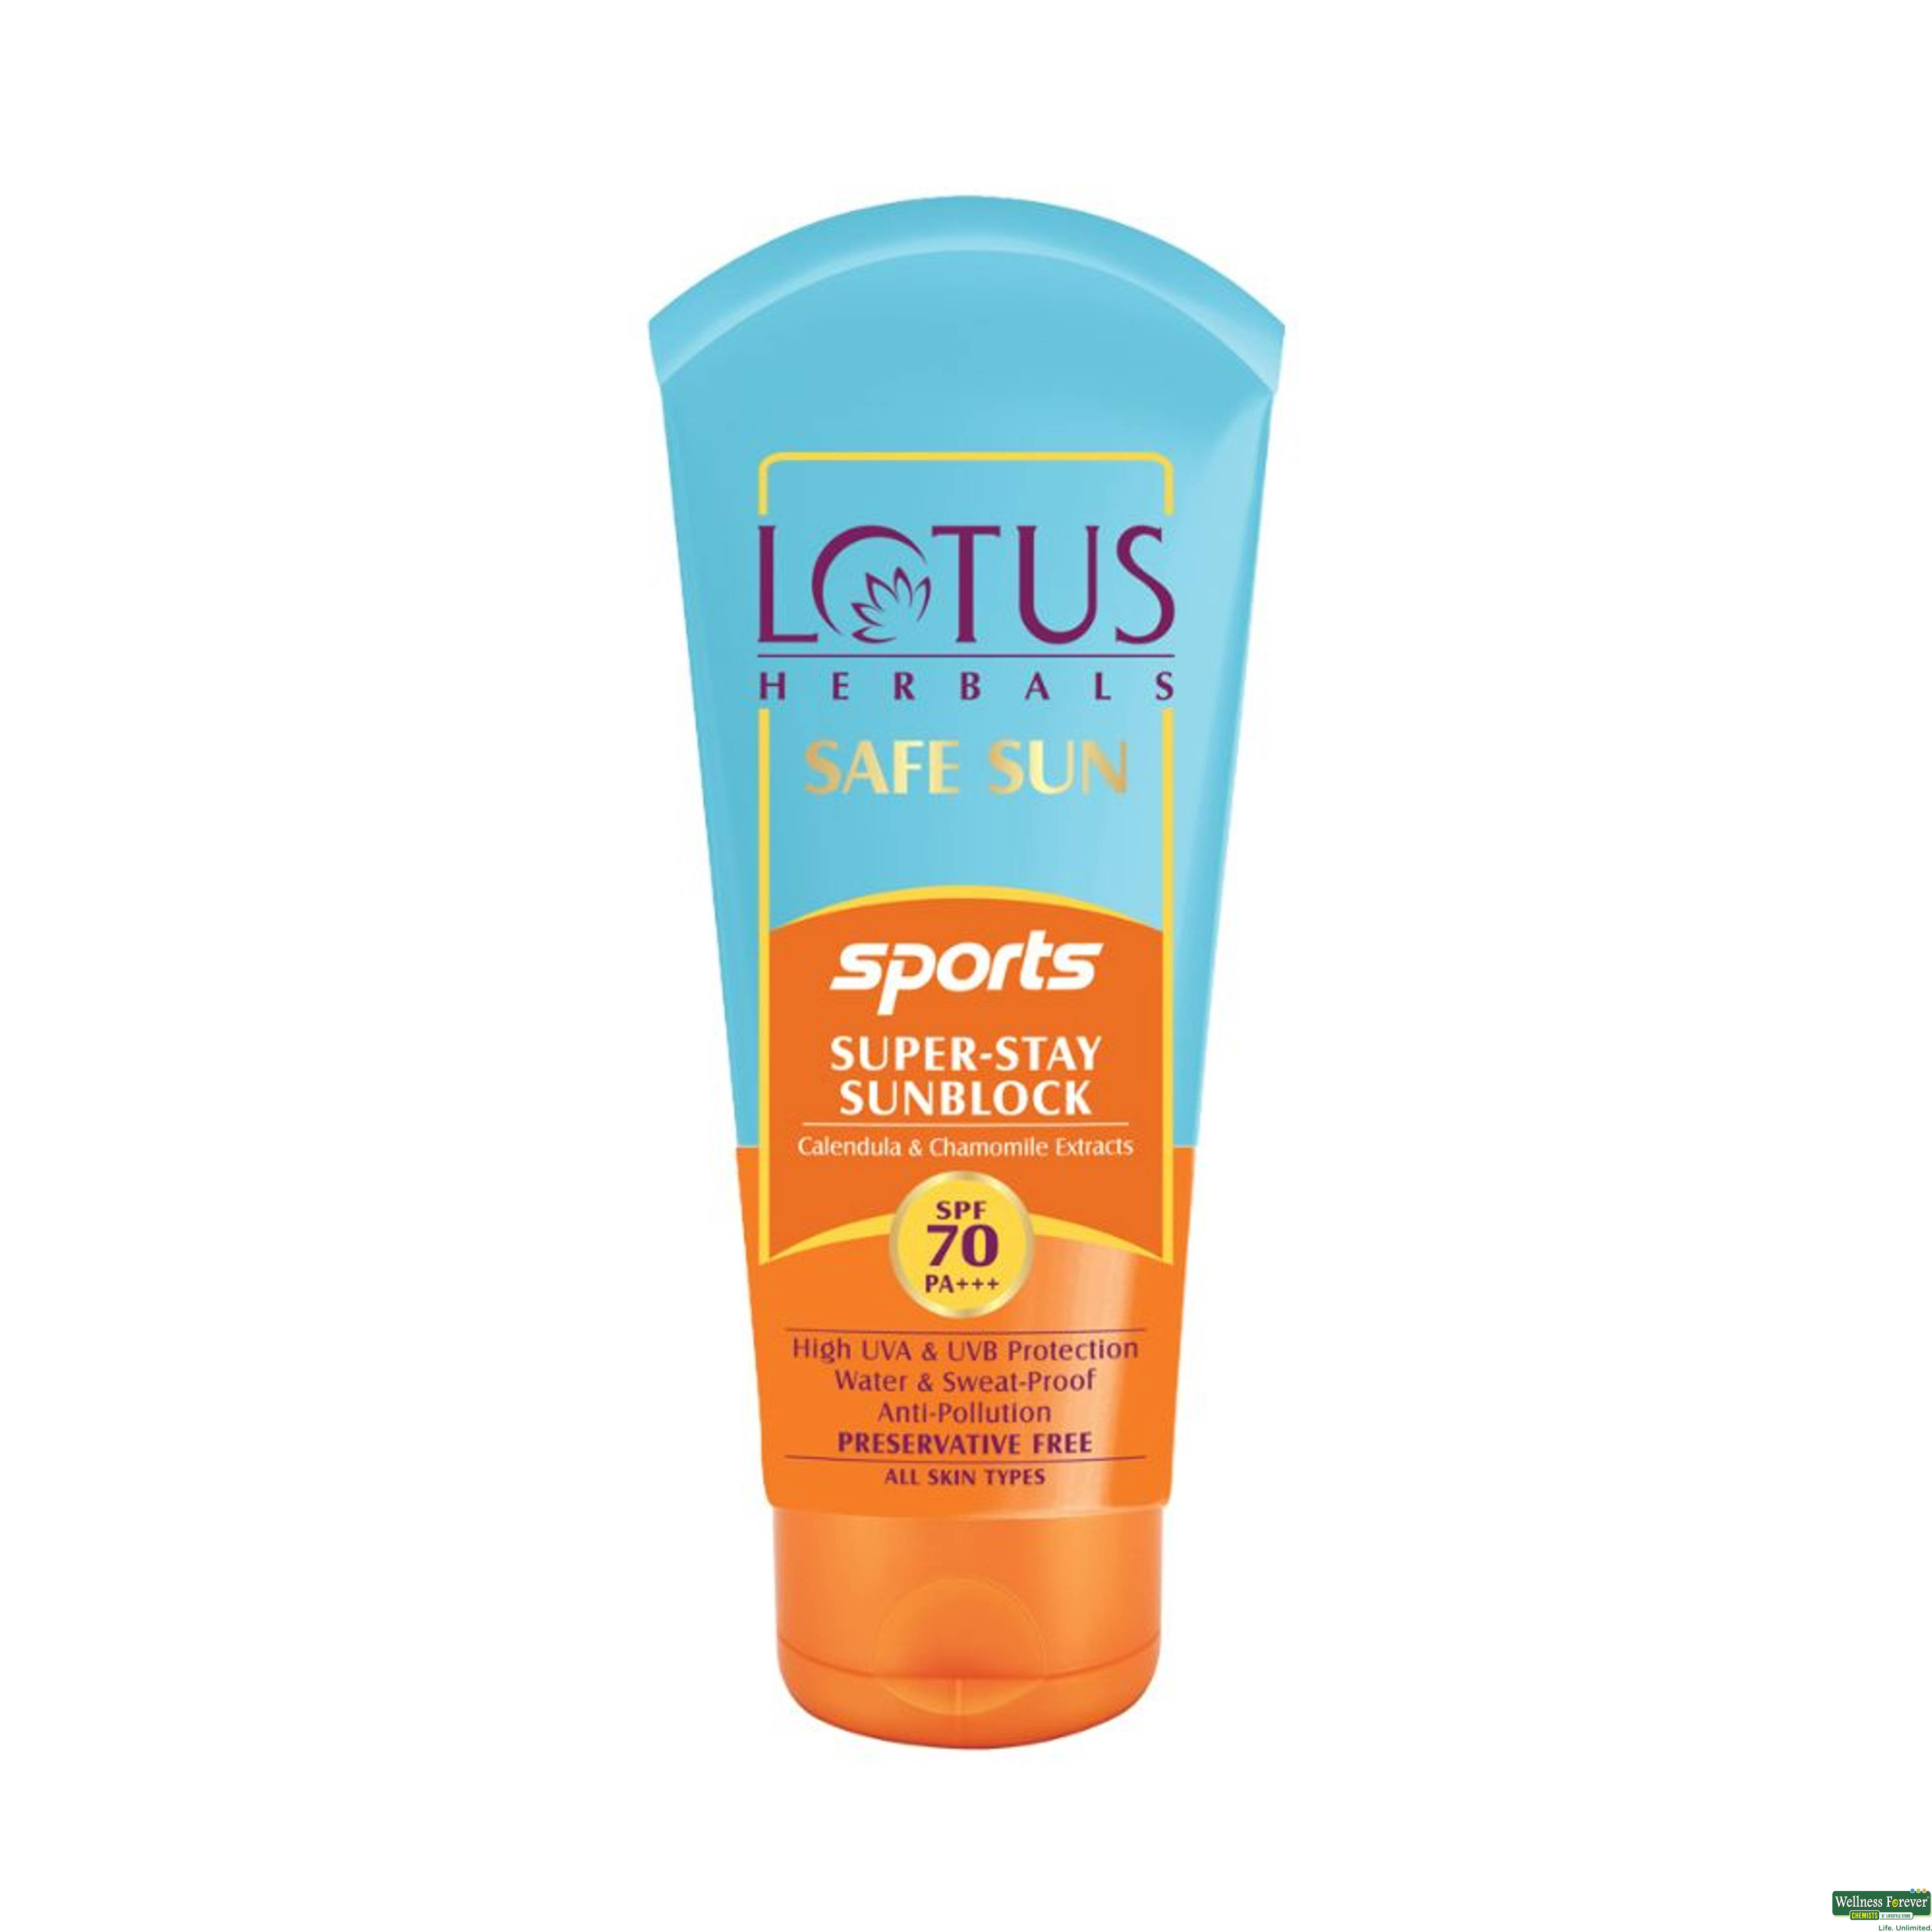 Lotus Herbals Safe Sun Sports Super Stay Sunscreen Cream SPF 70 PA+++, 80 g-image